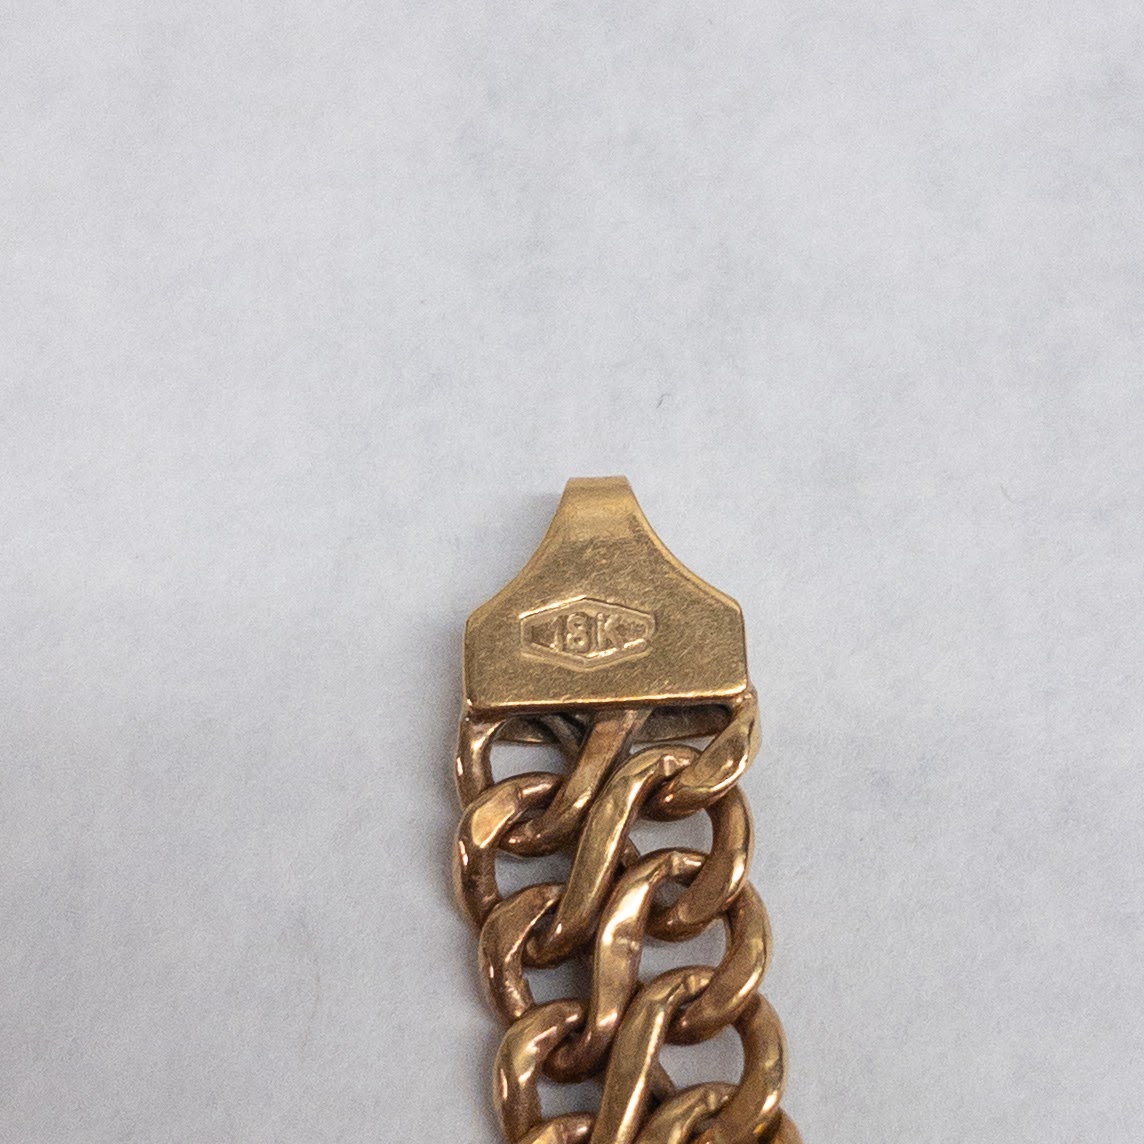 18K Gold Double Row Curb Link Bracelet NEEDS REPAIR